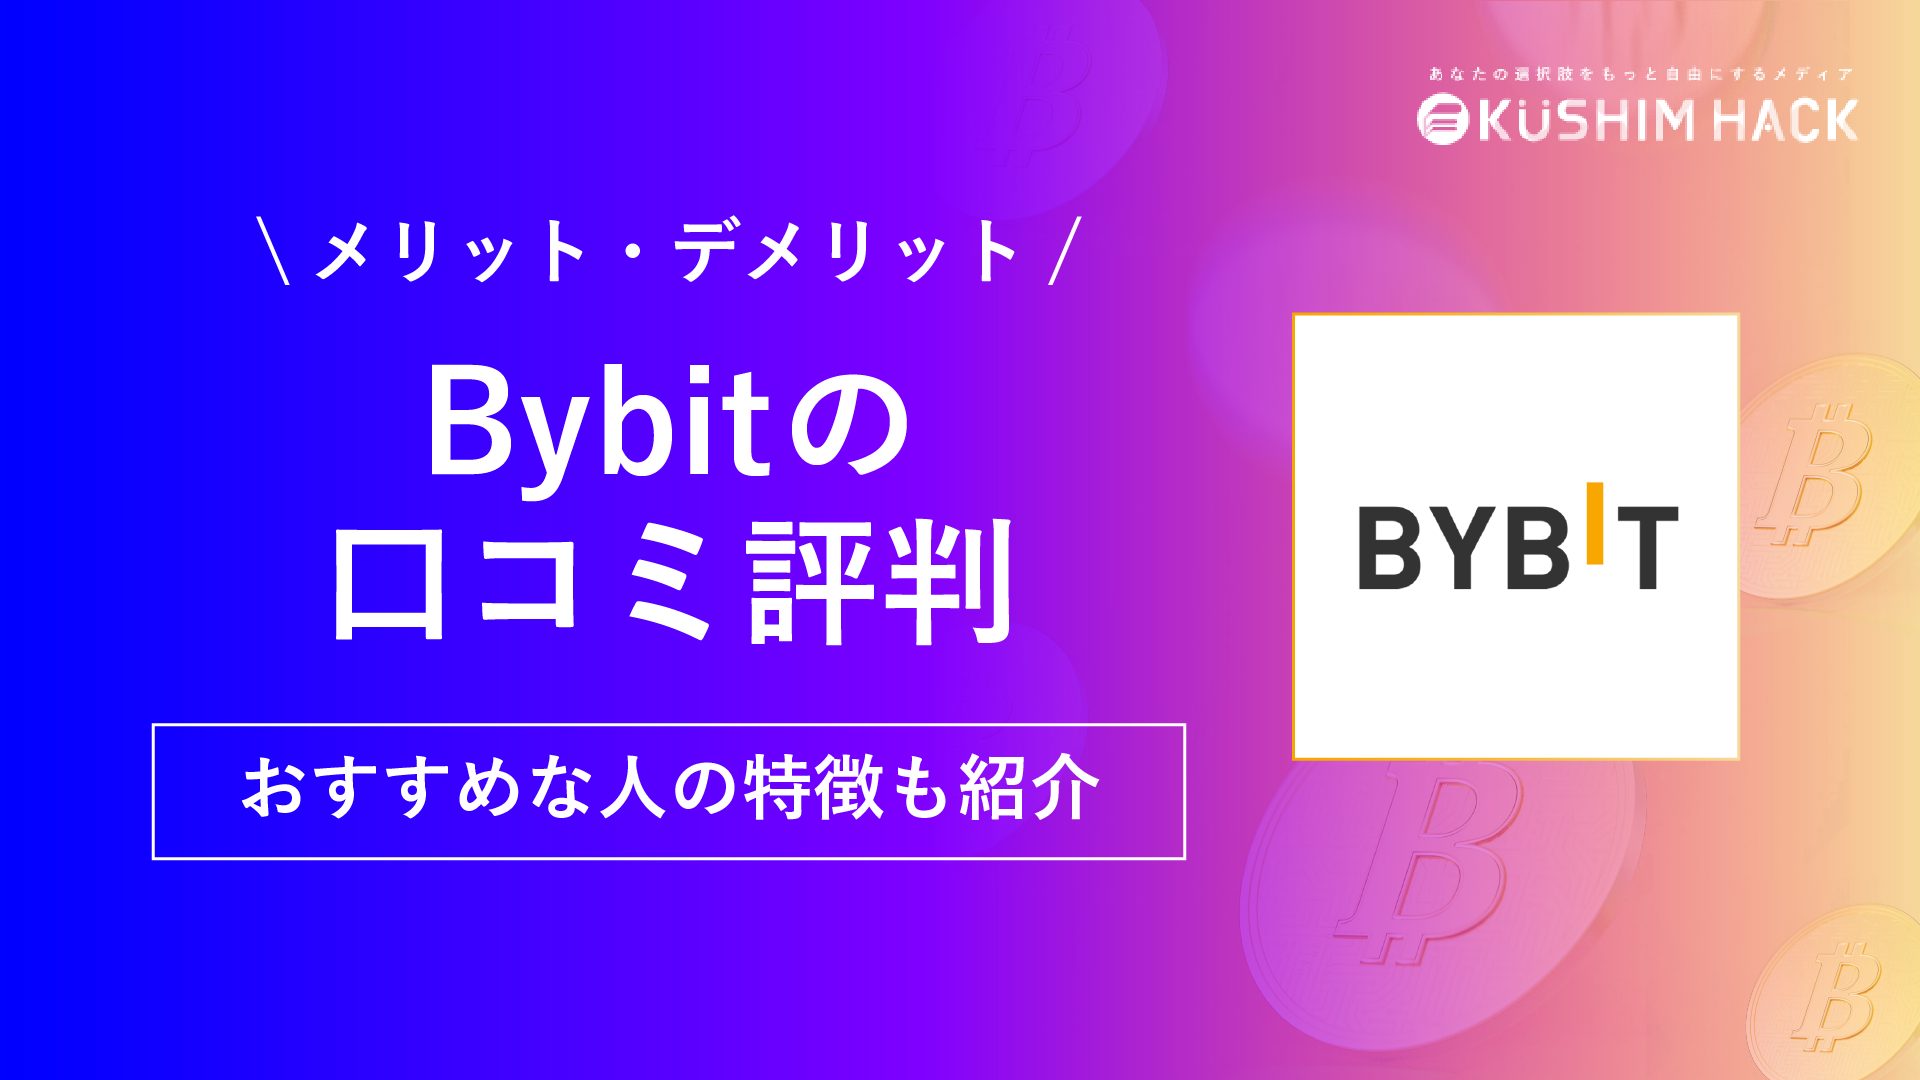 Bybit/バイビットとは？入金方法や使い方、手数料など徹底解説